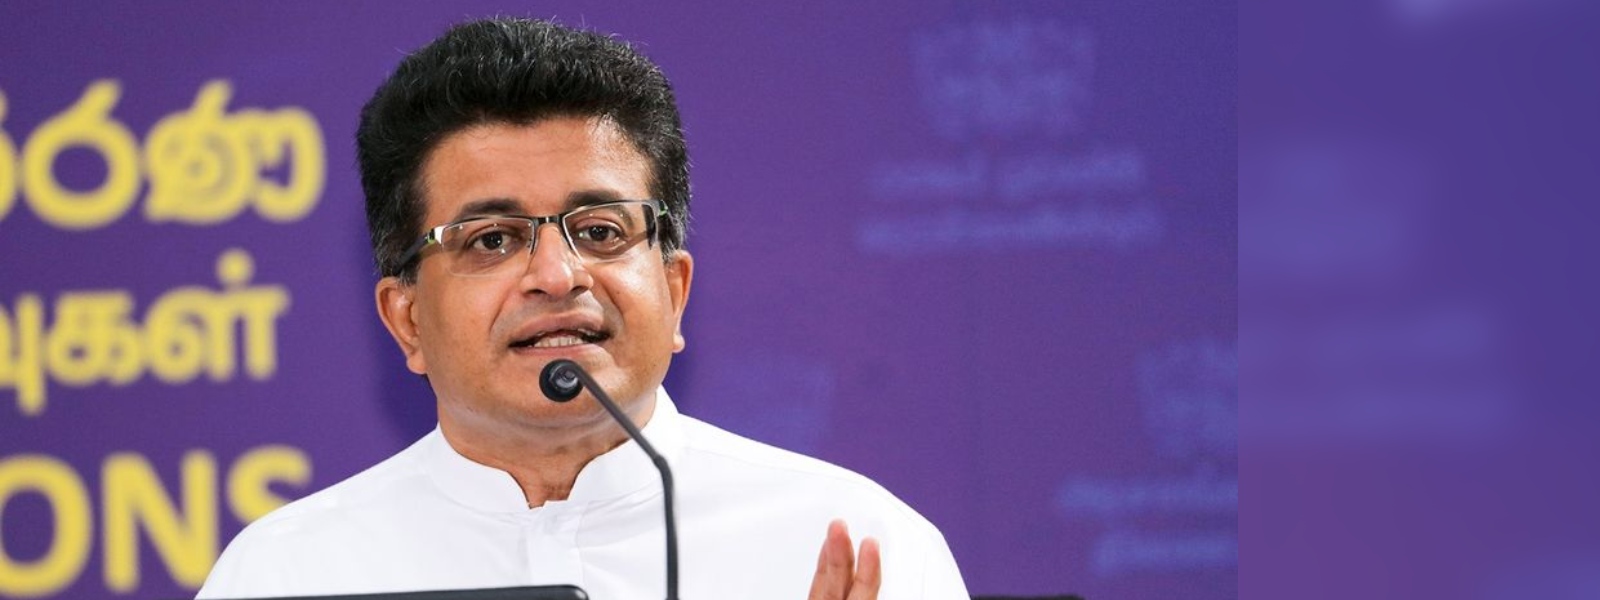 Sri Lanka to make USD payment for oil tankers, NO future power cuts – Gammanpila